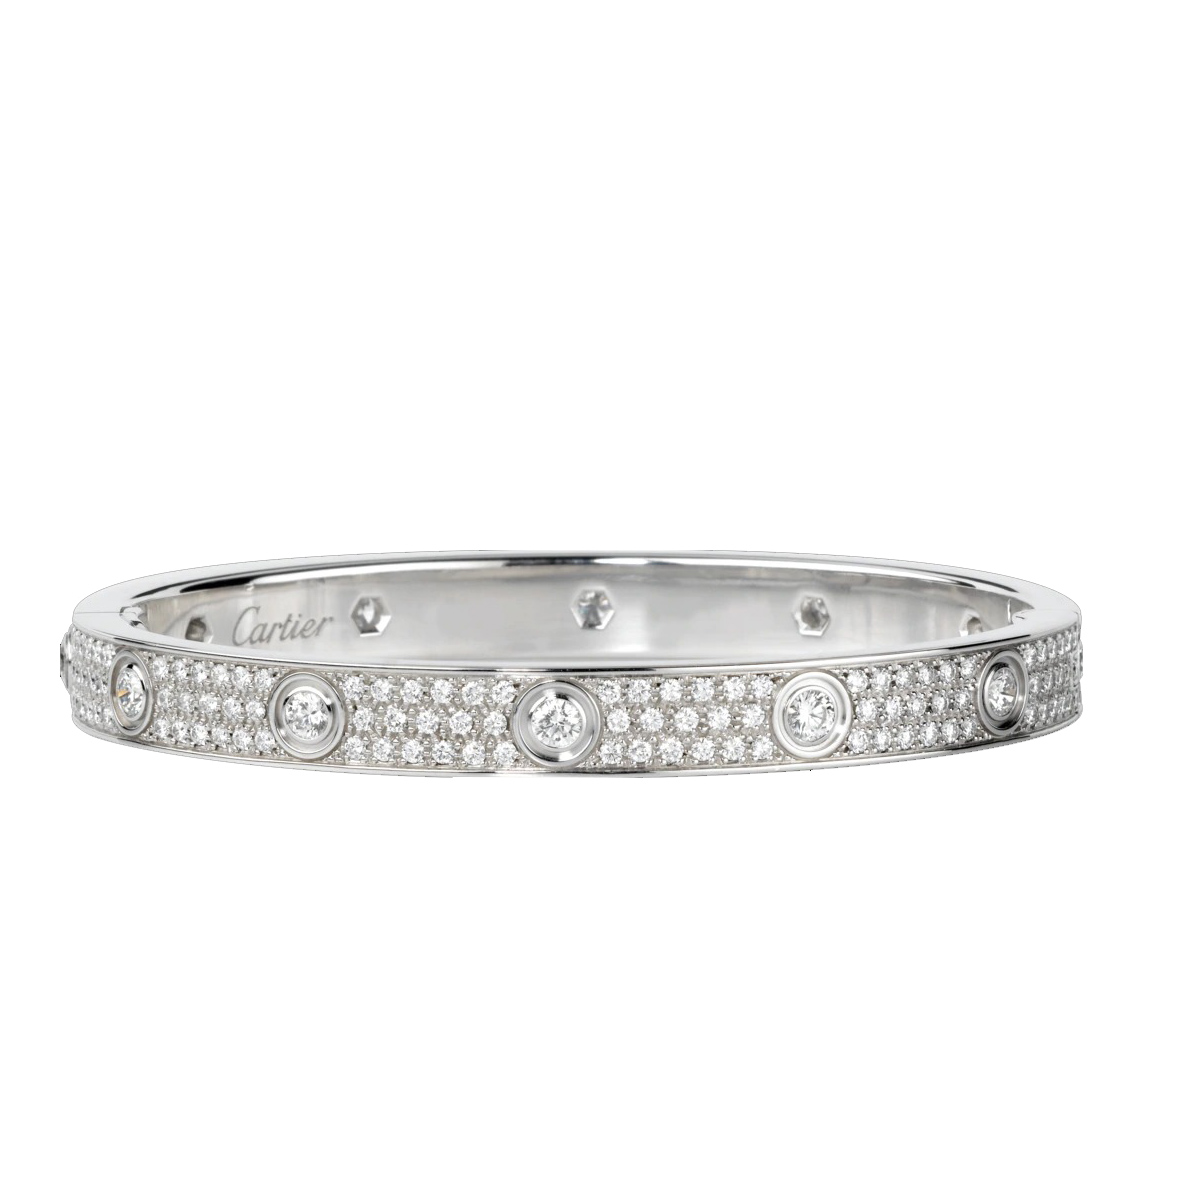 925 silver cartier bracelet